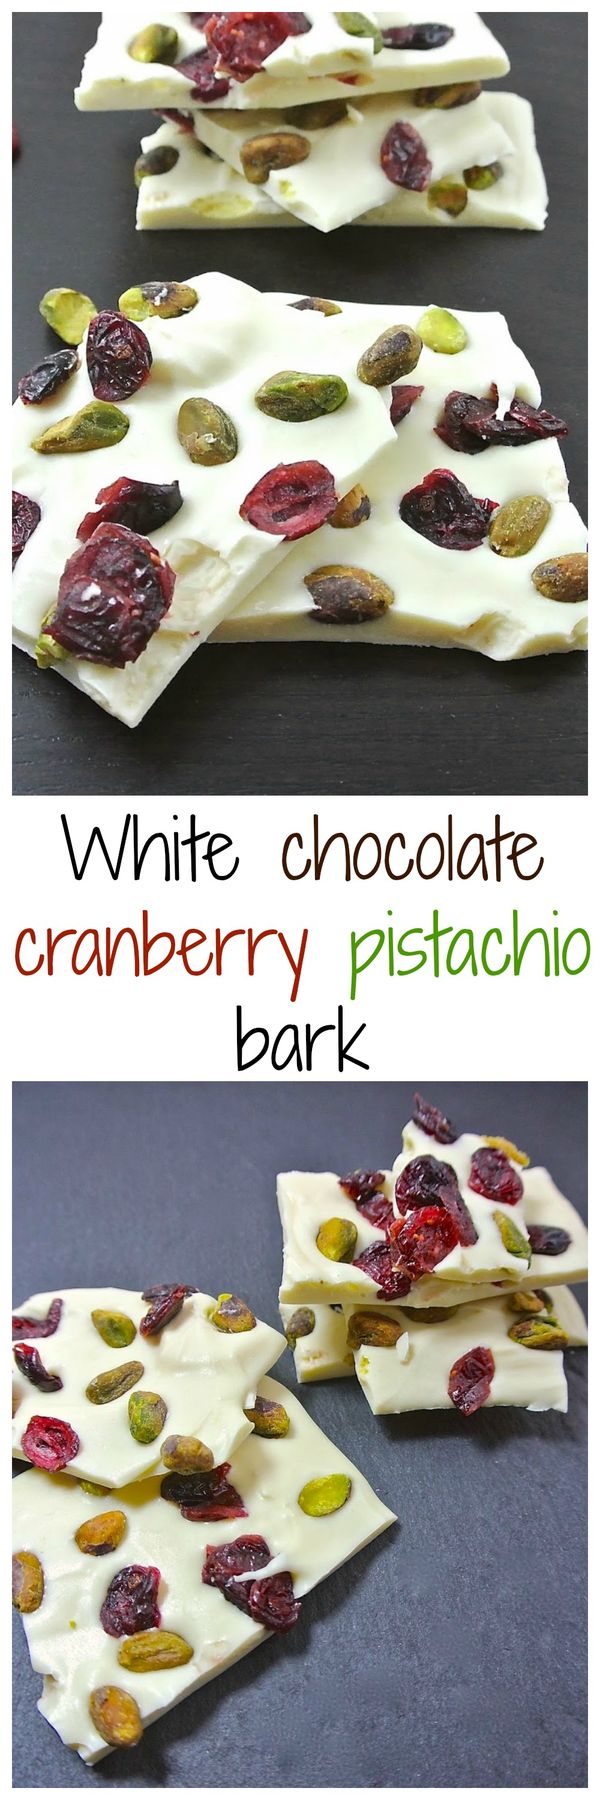 White chocolate cranberry & pistachio bark